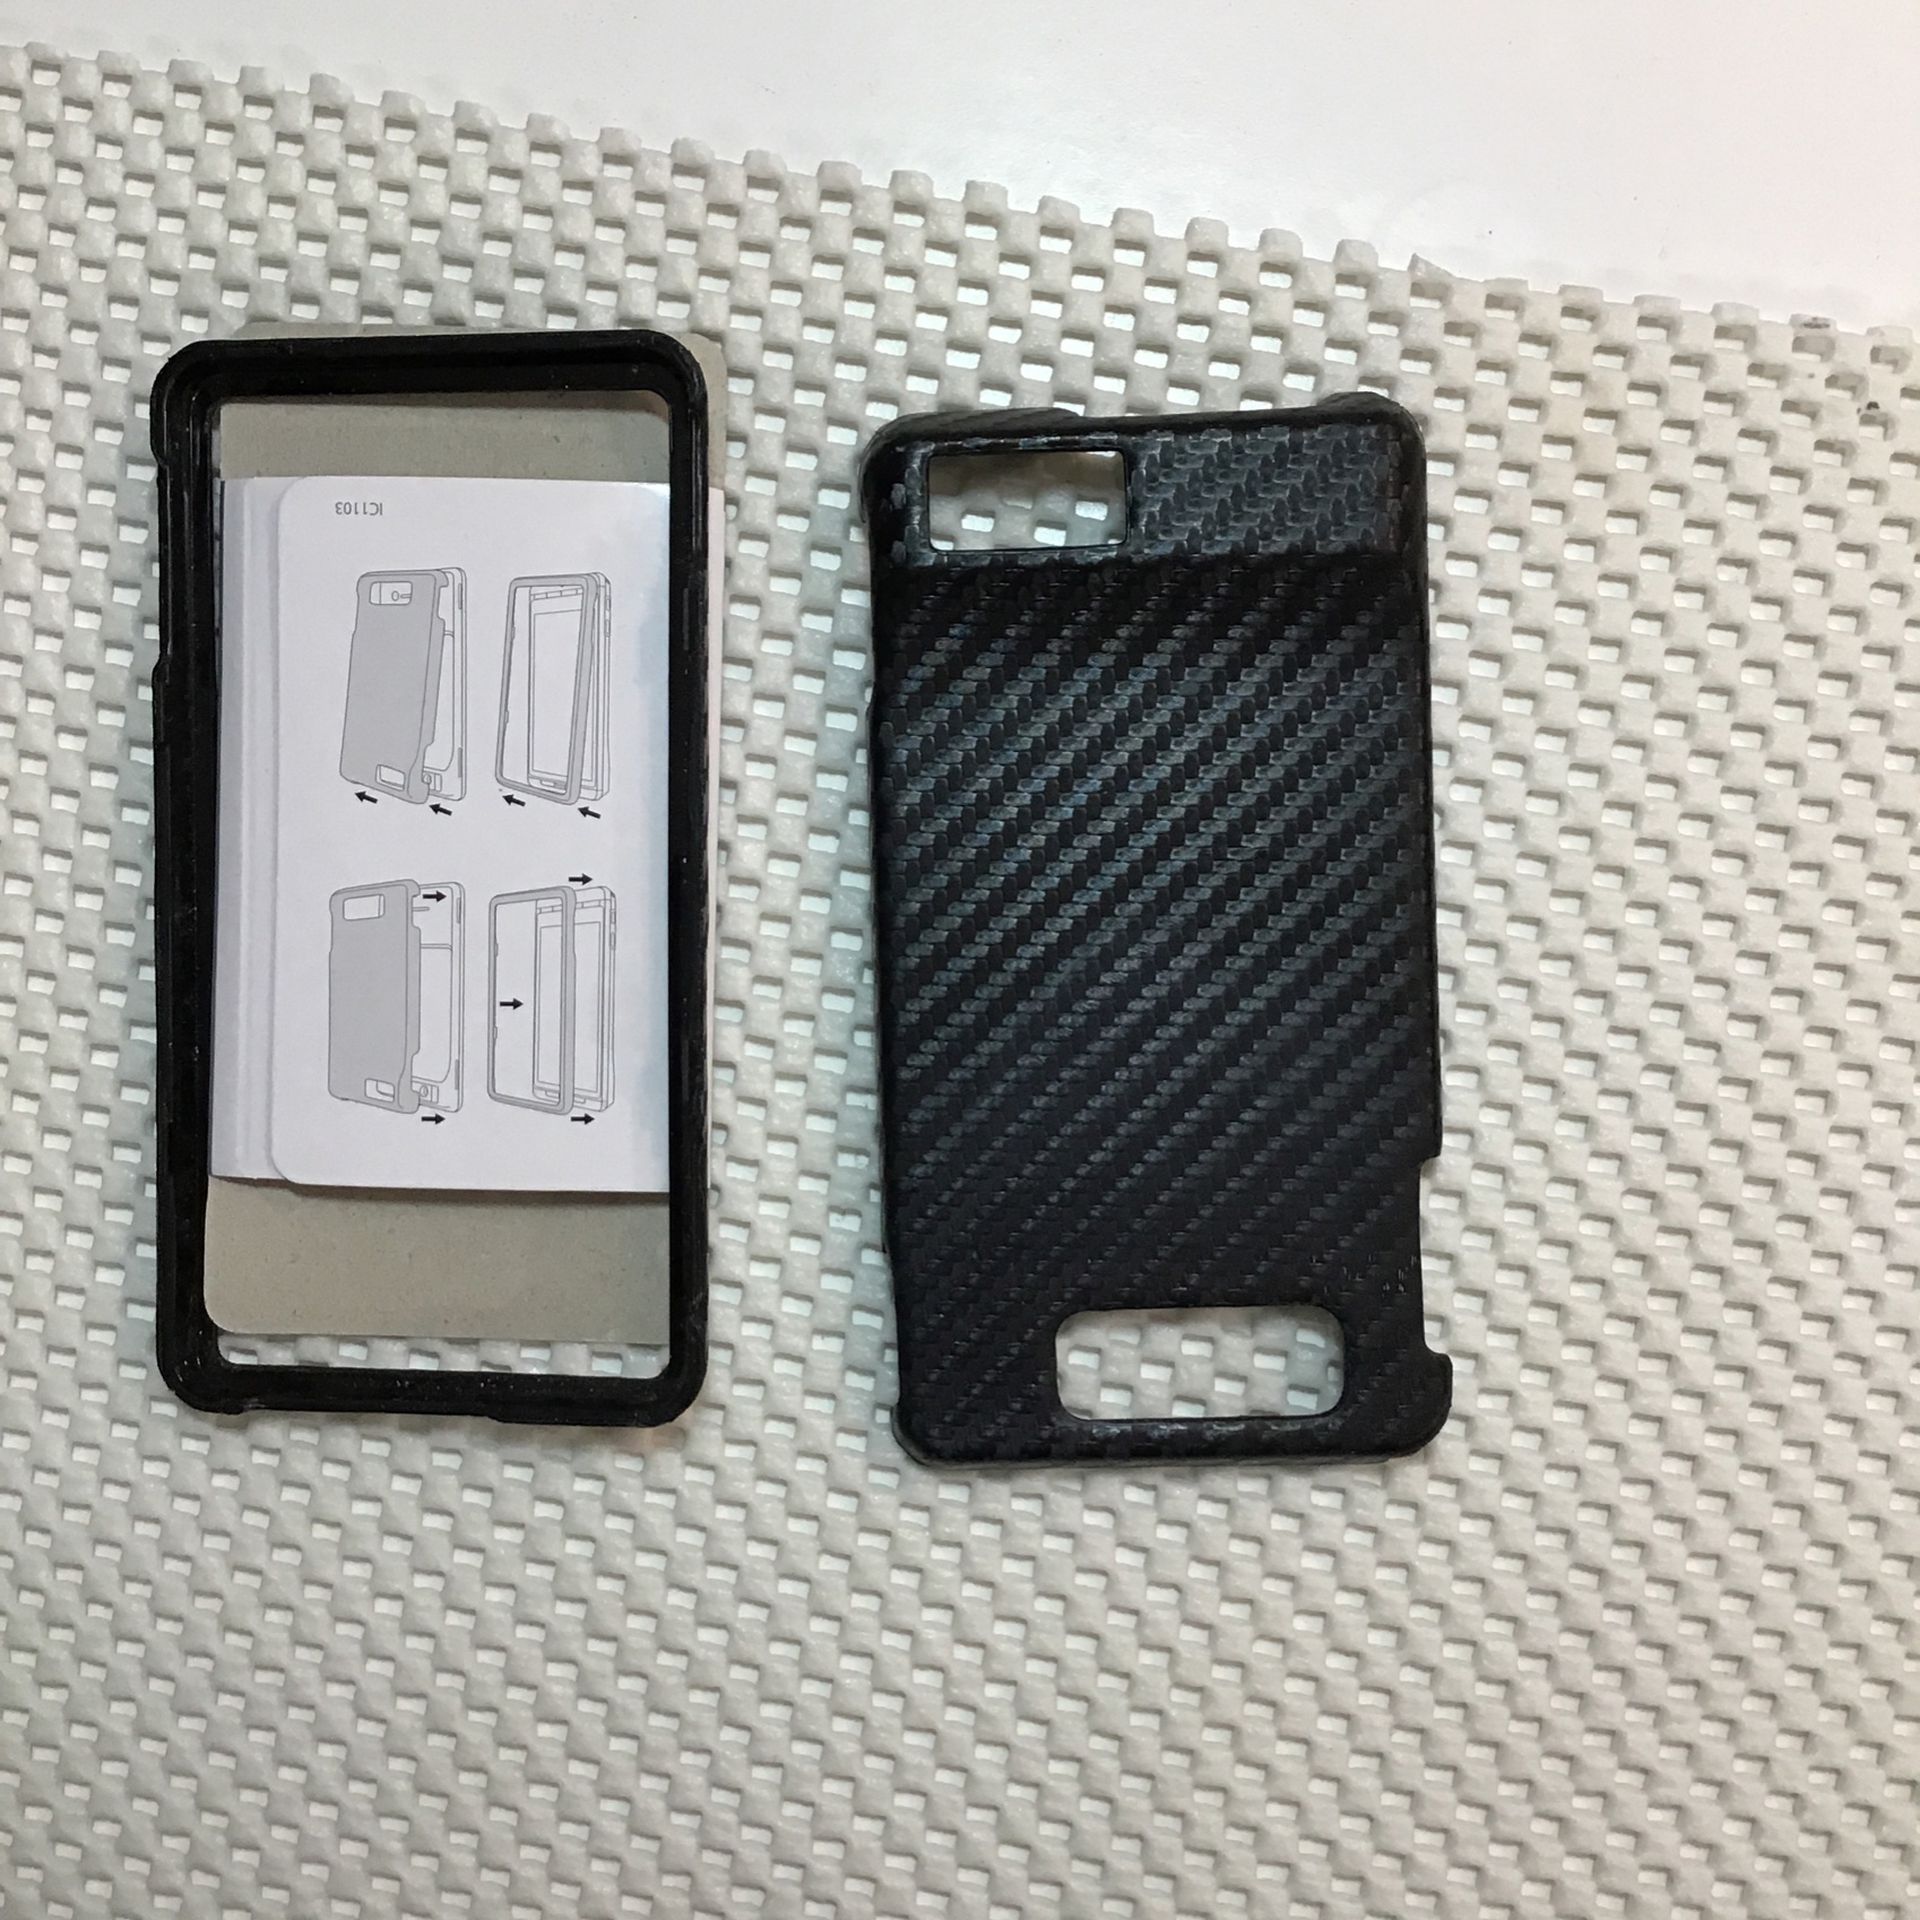 Droid X Carbon fiber phone case might fit other phones